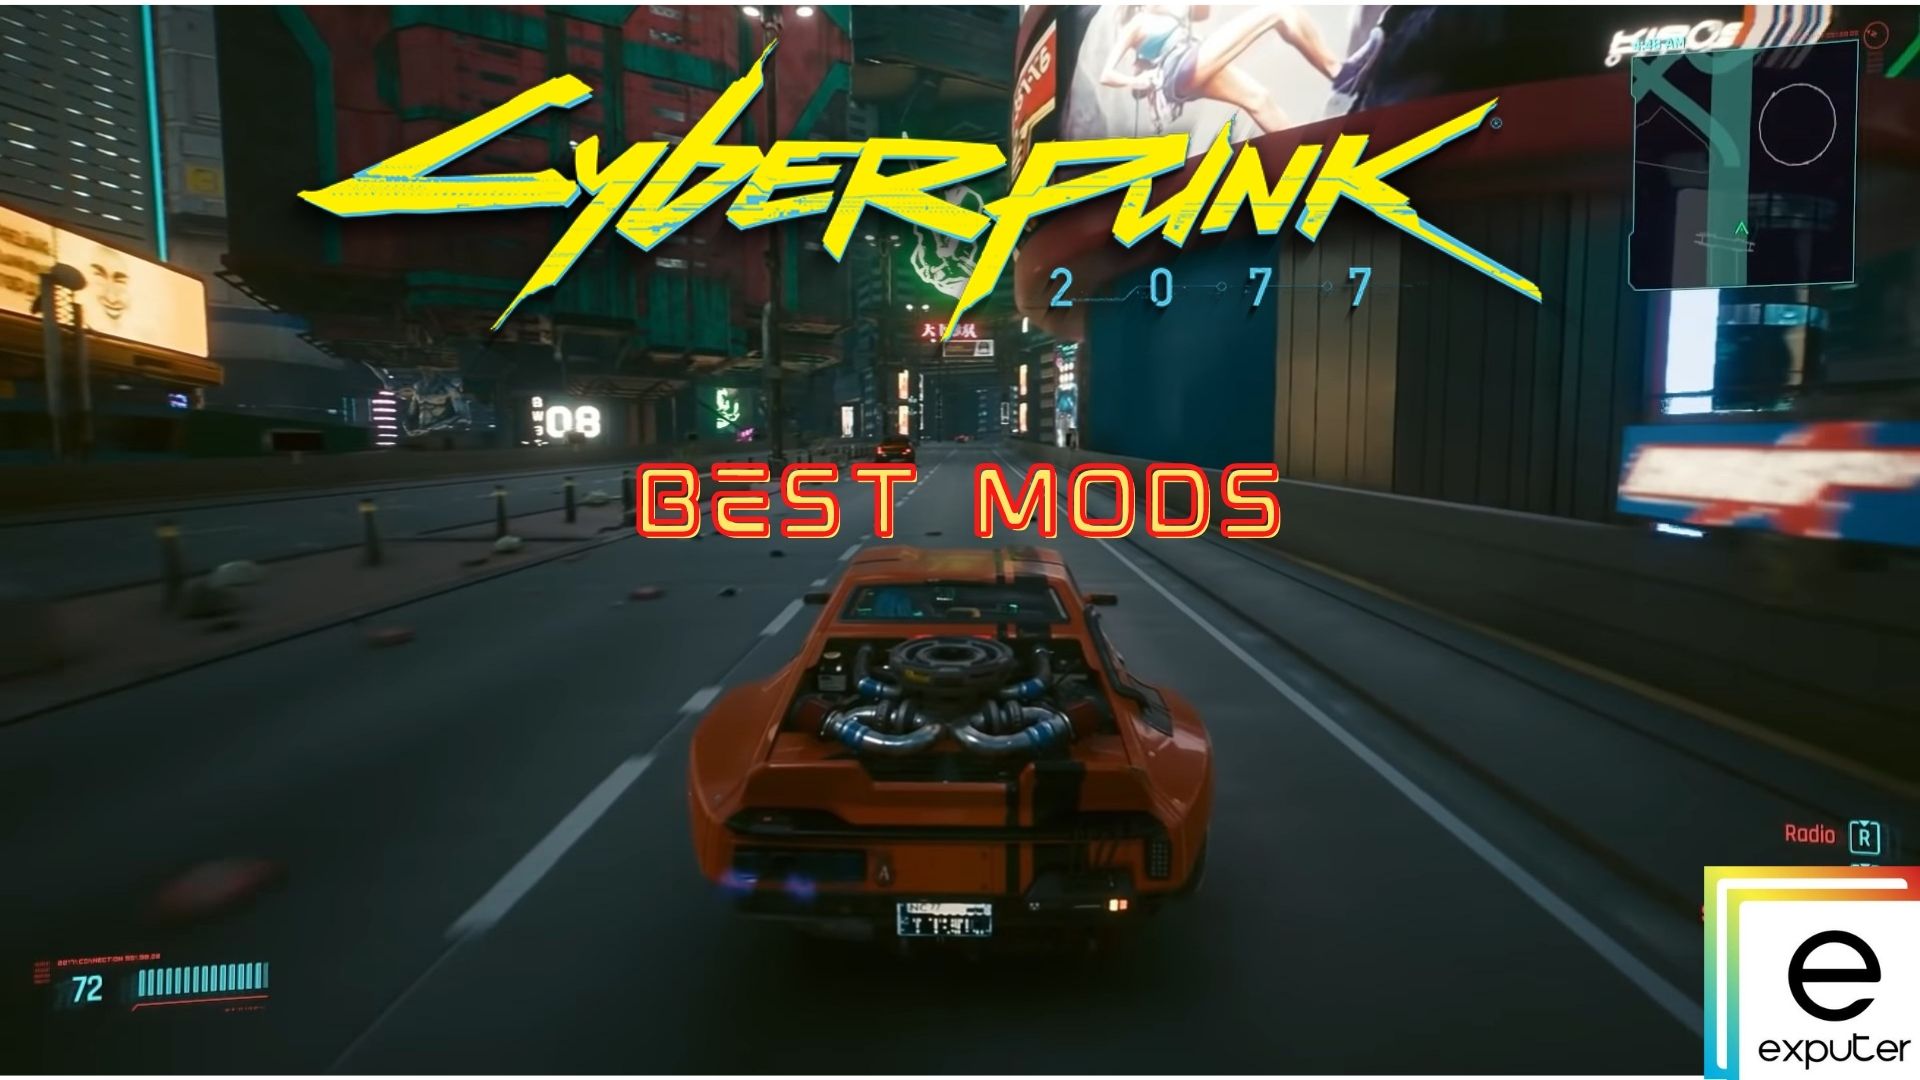 best mods in Cyberpunk 2077